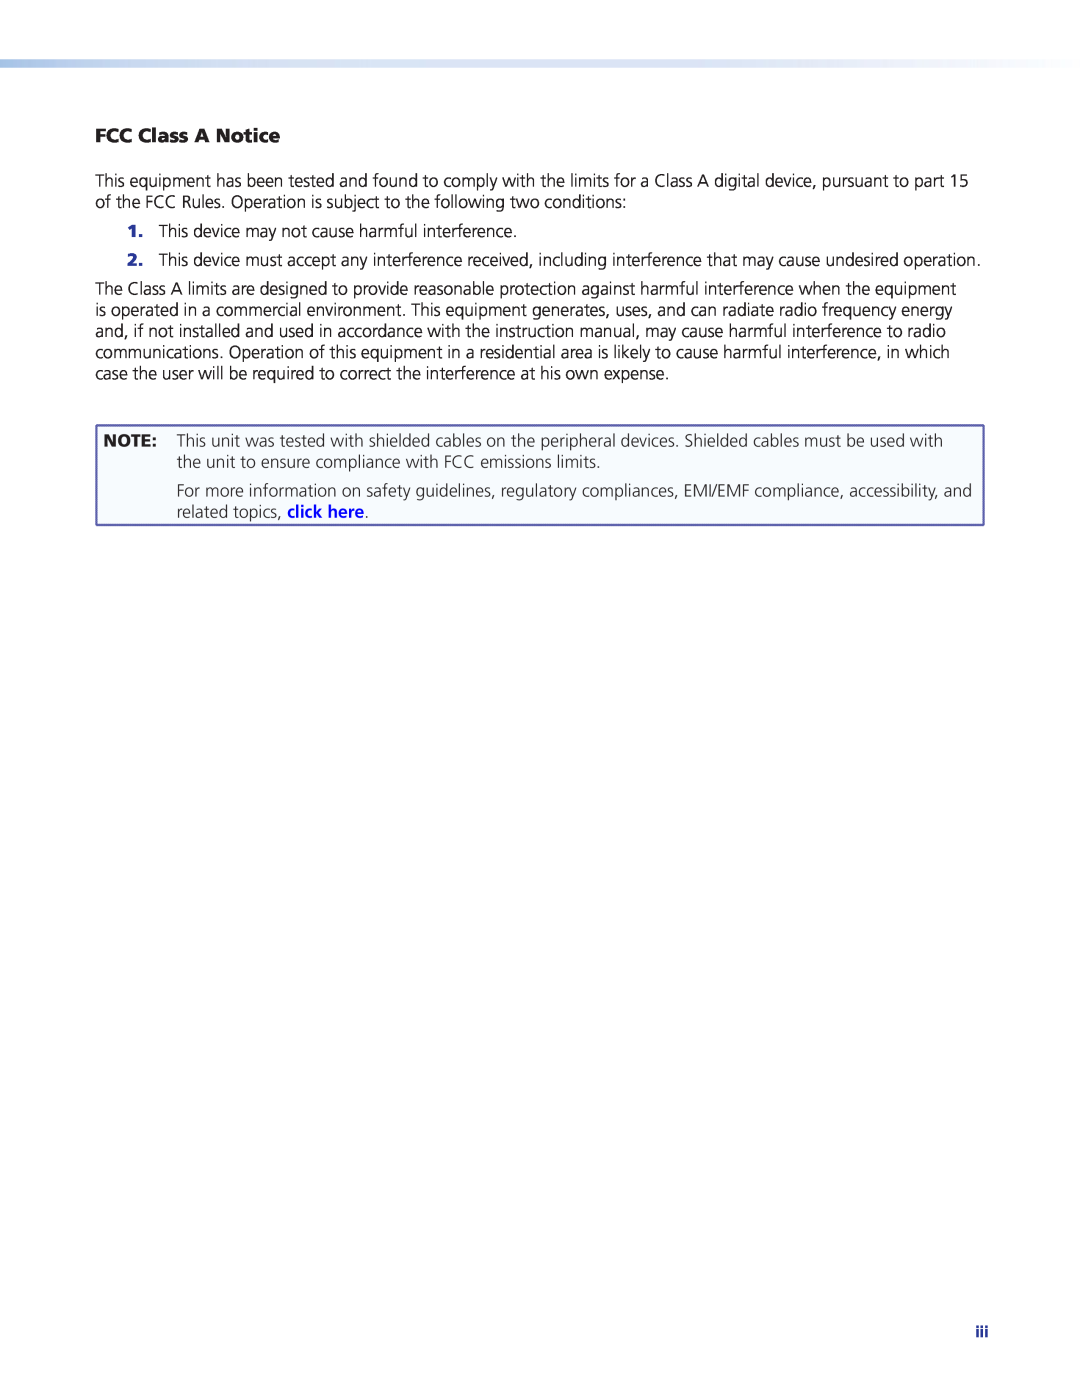 Extron electronic IPL T PCS4i manual FCC Class A Notice 